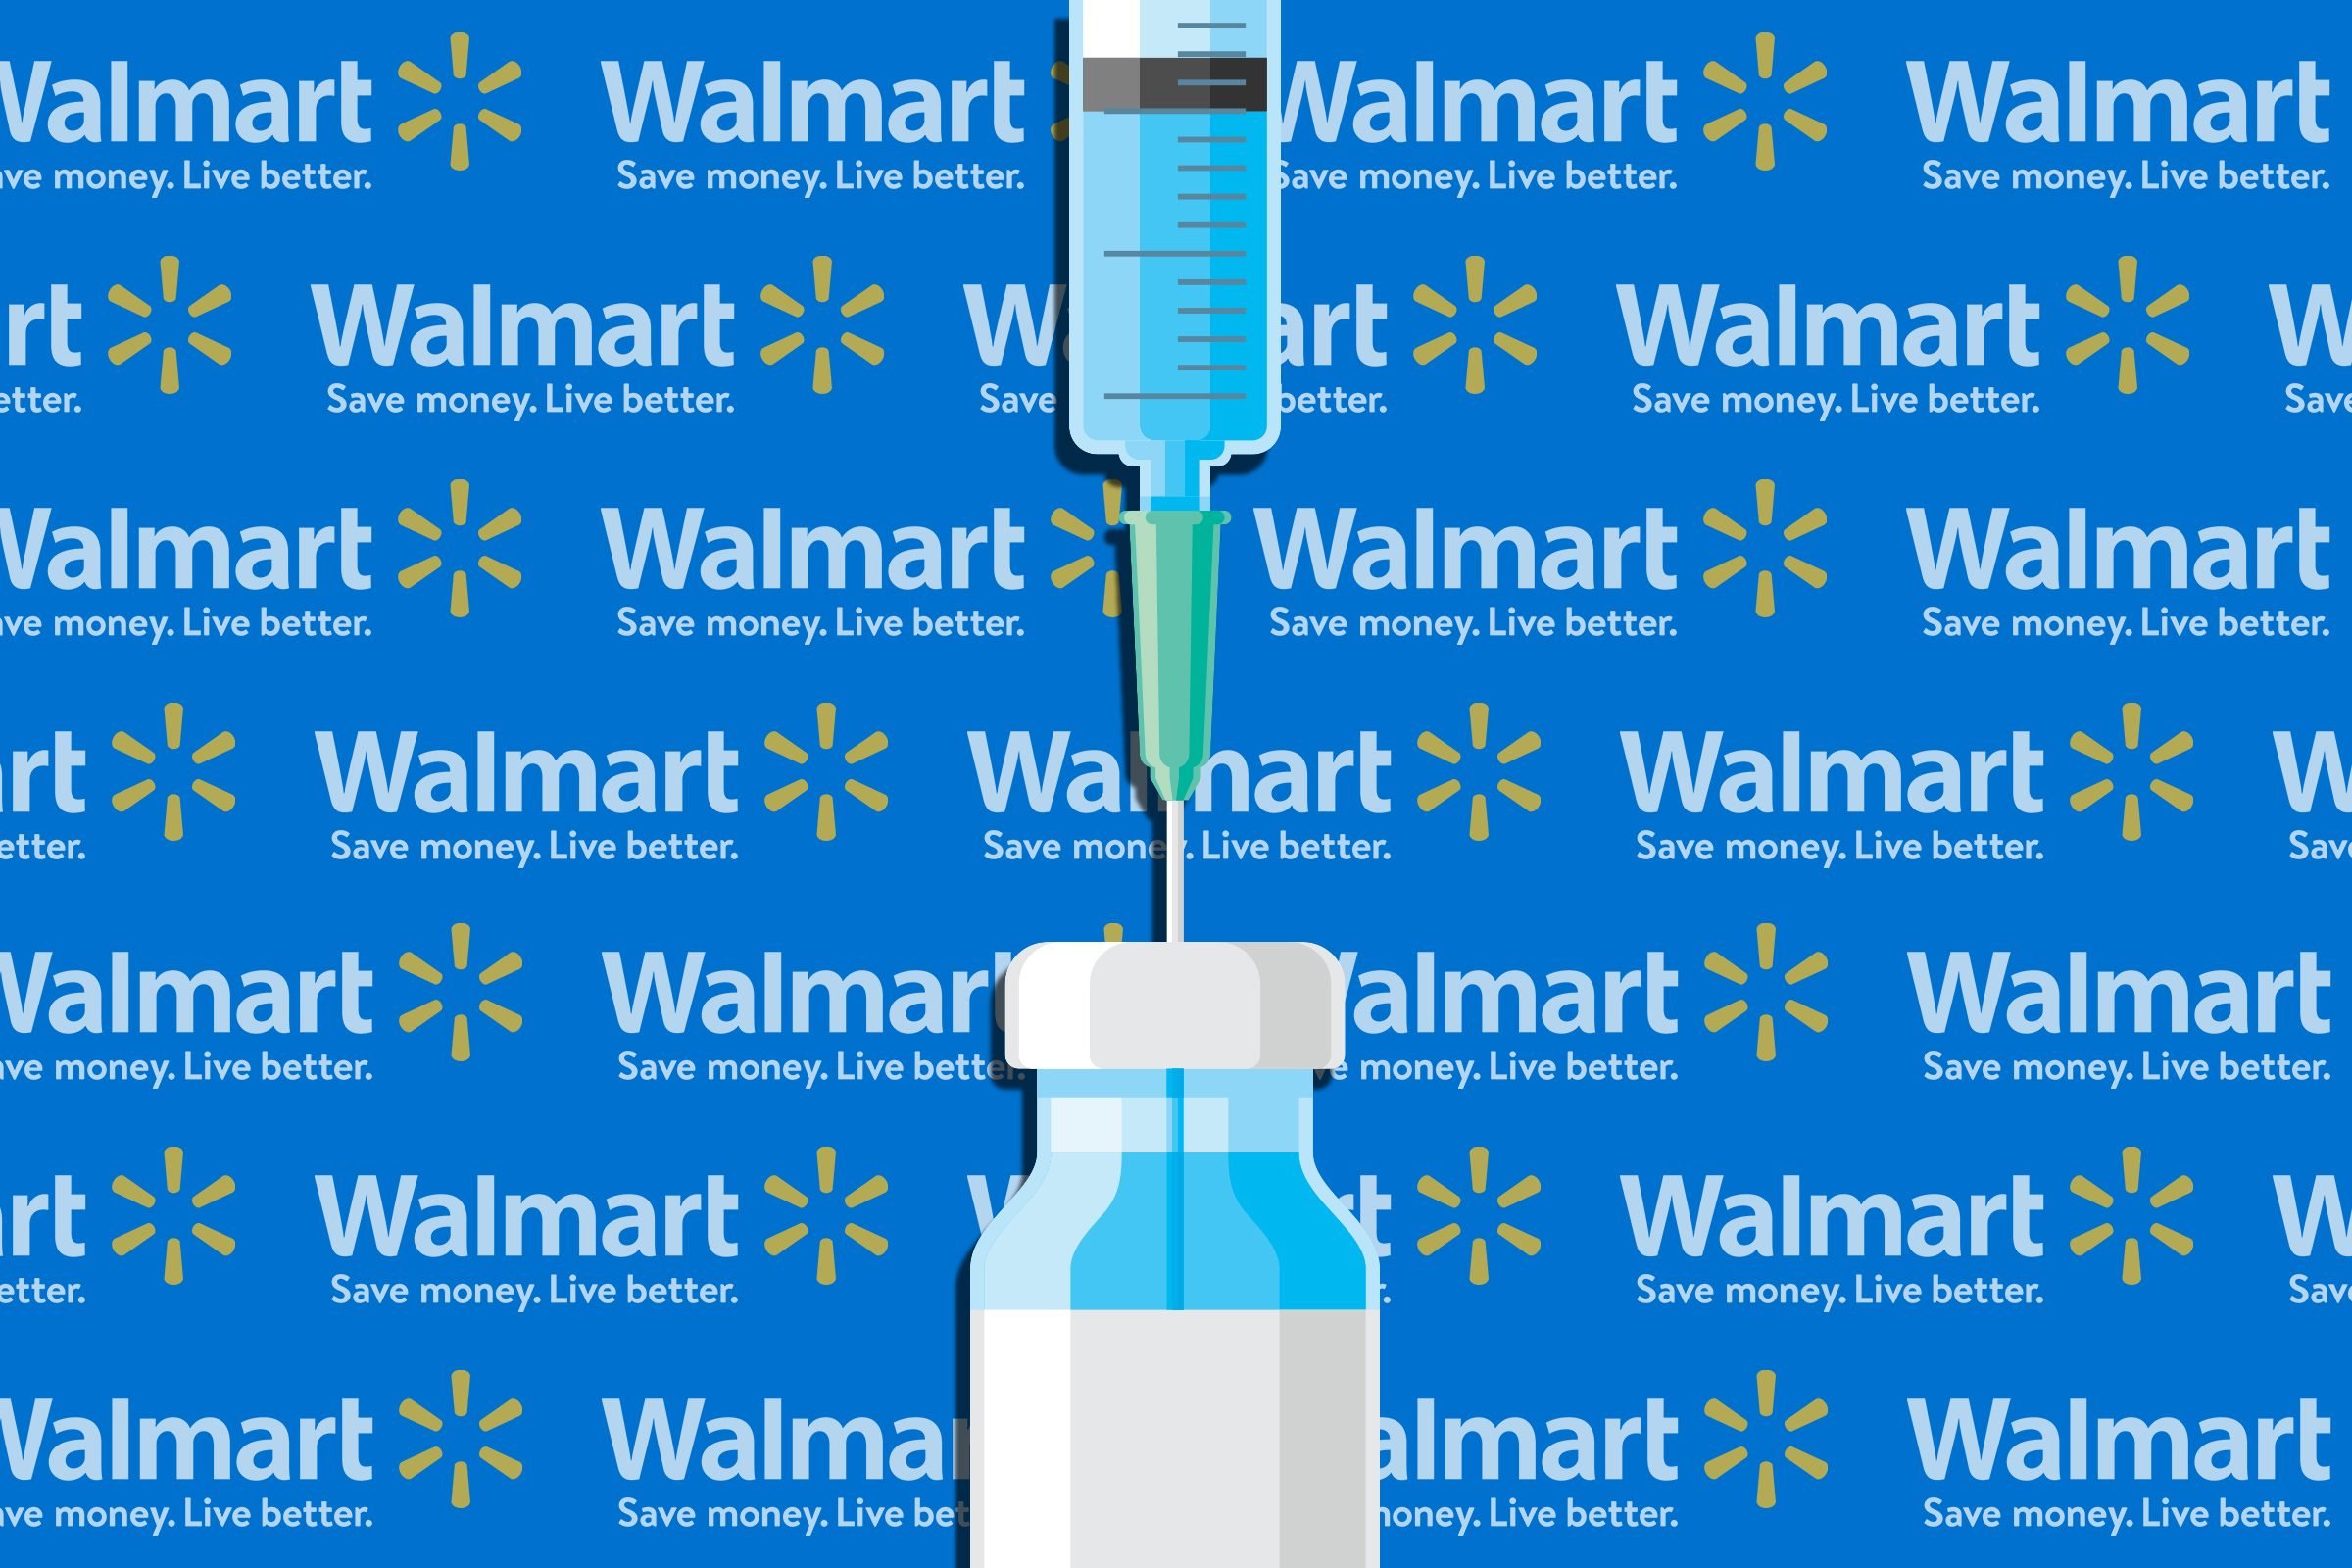 How to Get a Flu Shot at Walmart